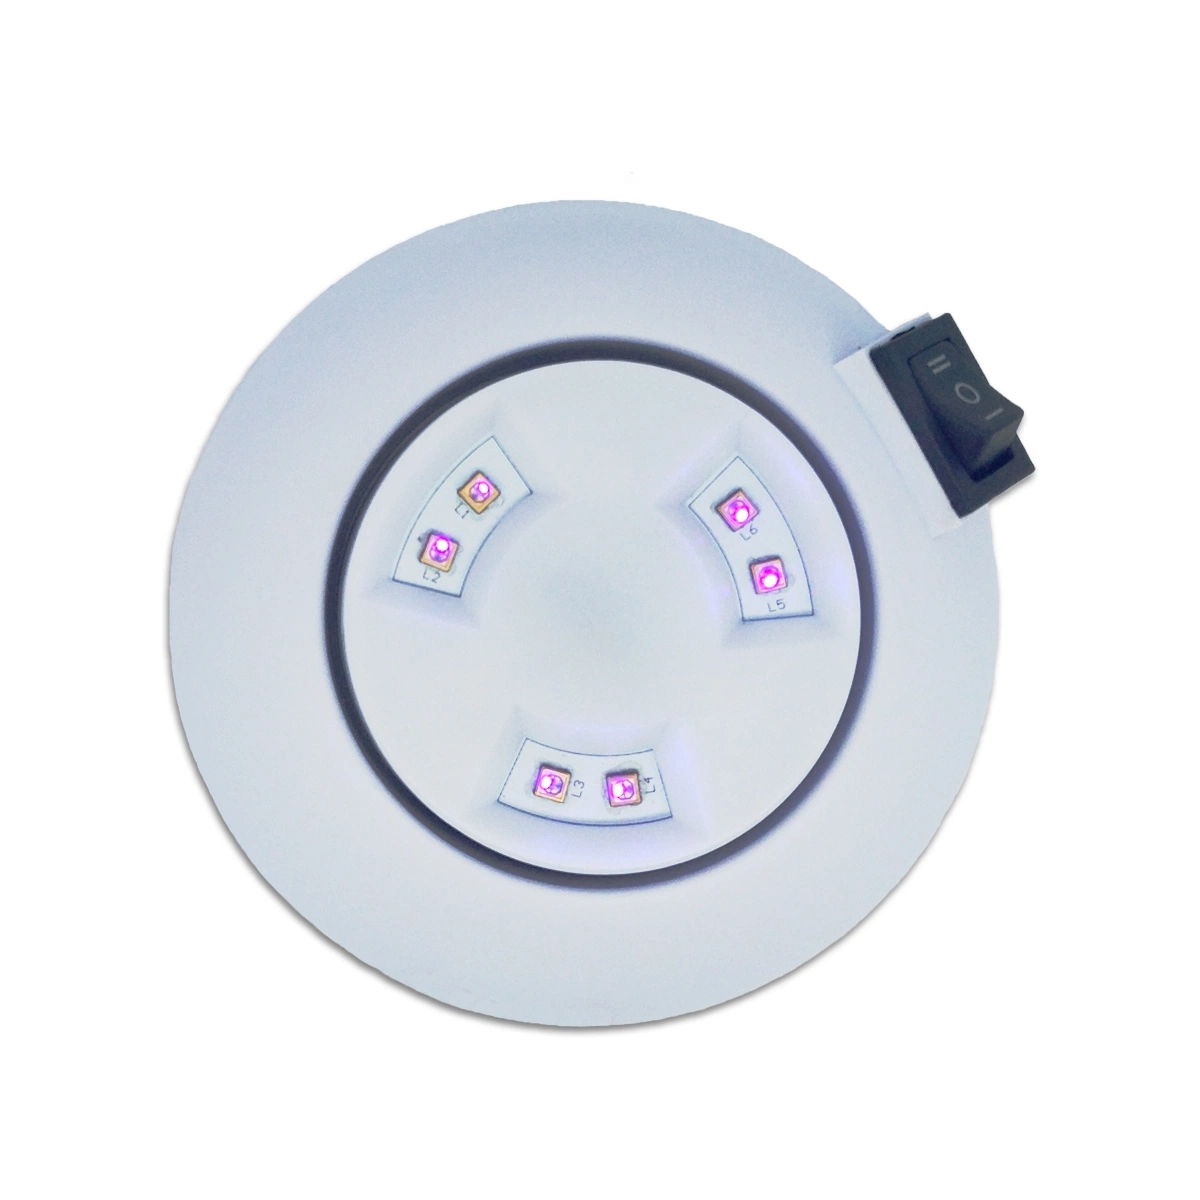 LED Auto UV-Lampe UV-Lampe Sterilisator Germizides UV-Licht